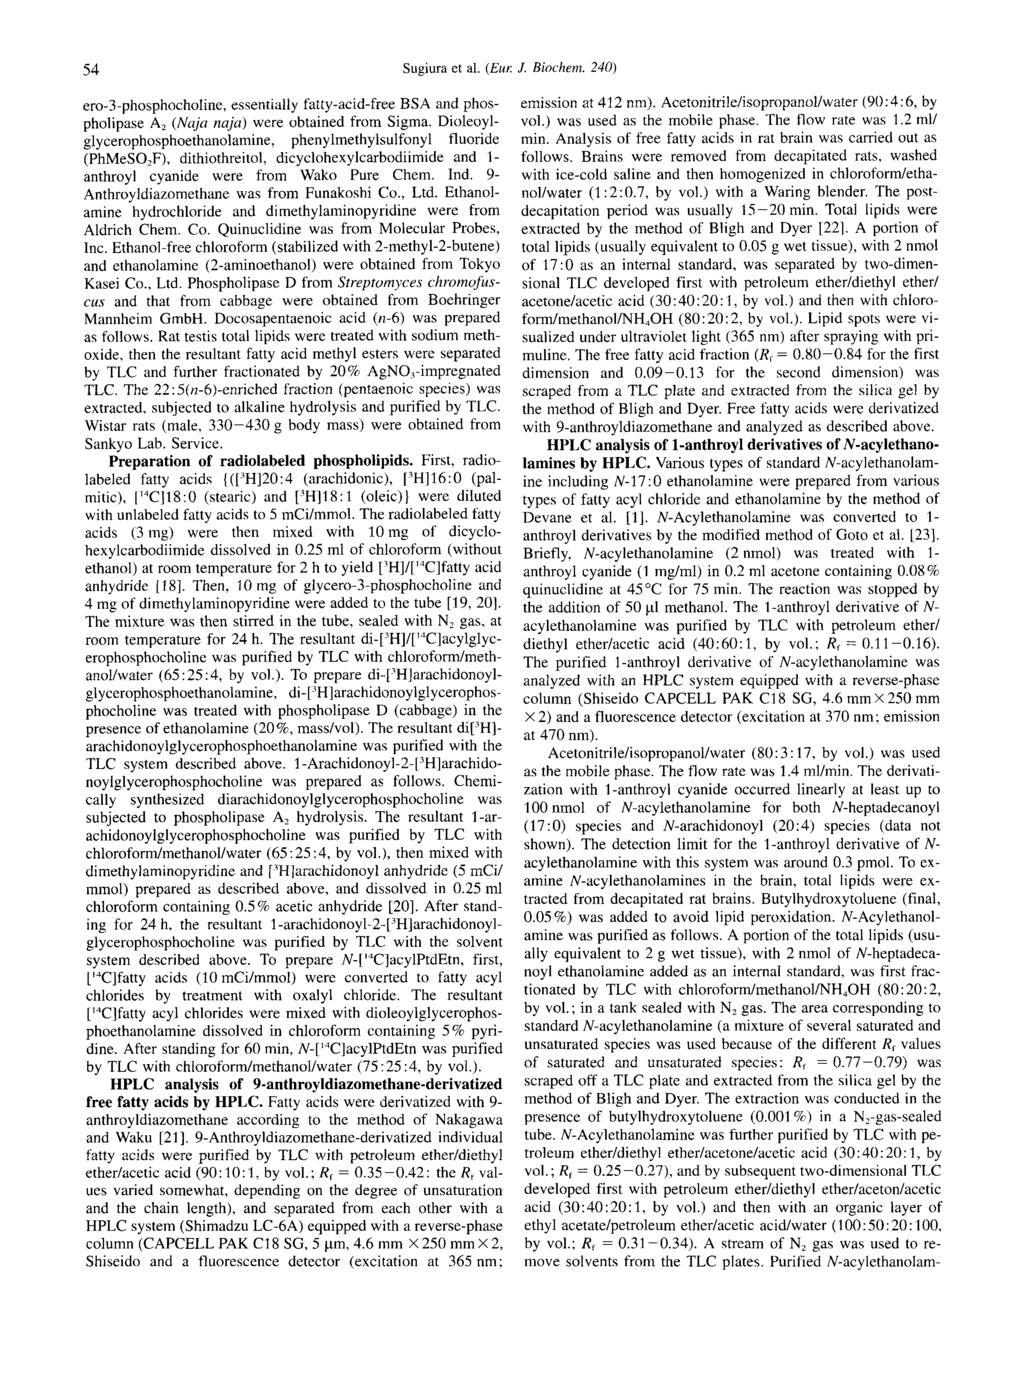 54 Sugiura et al. (Eur: J. Biochenz. 240) ero-3-phosphocholine, essentially fatty-acid-free BSA and phospholipase A, (Nuja nuja) were obtained from Sigma.